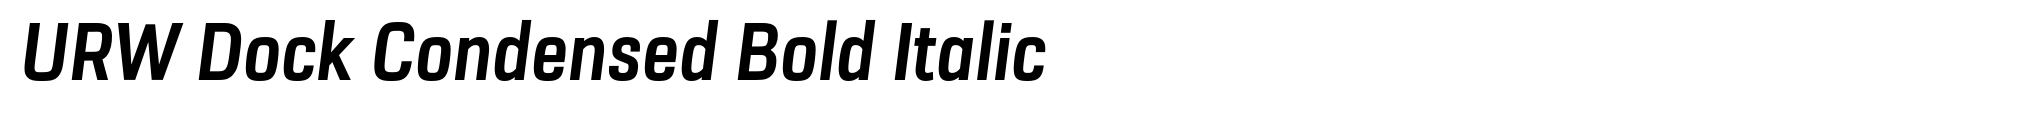 URW Dock Condensed Bold Italic image